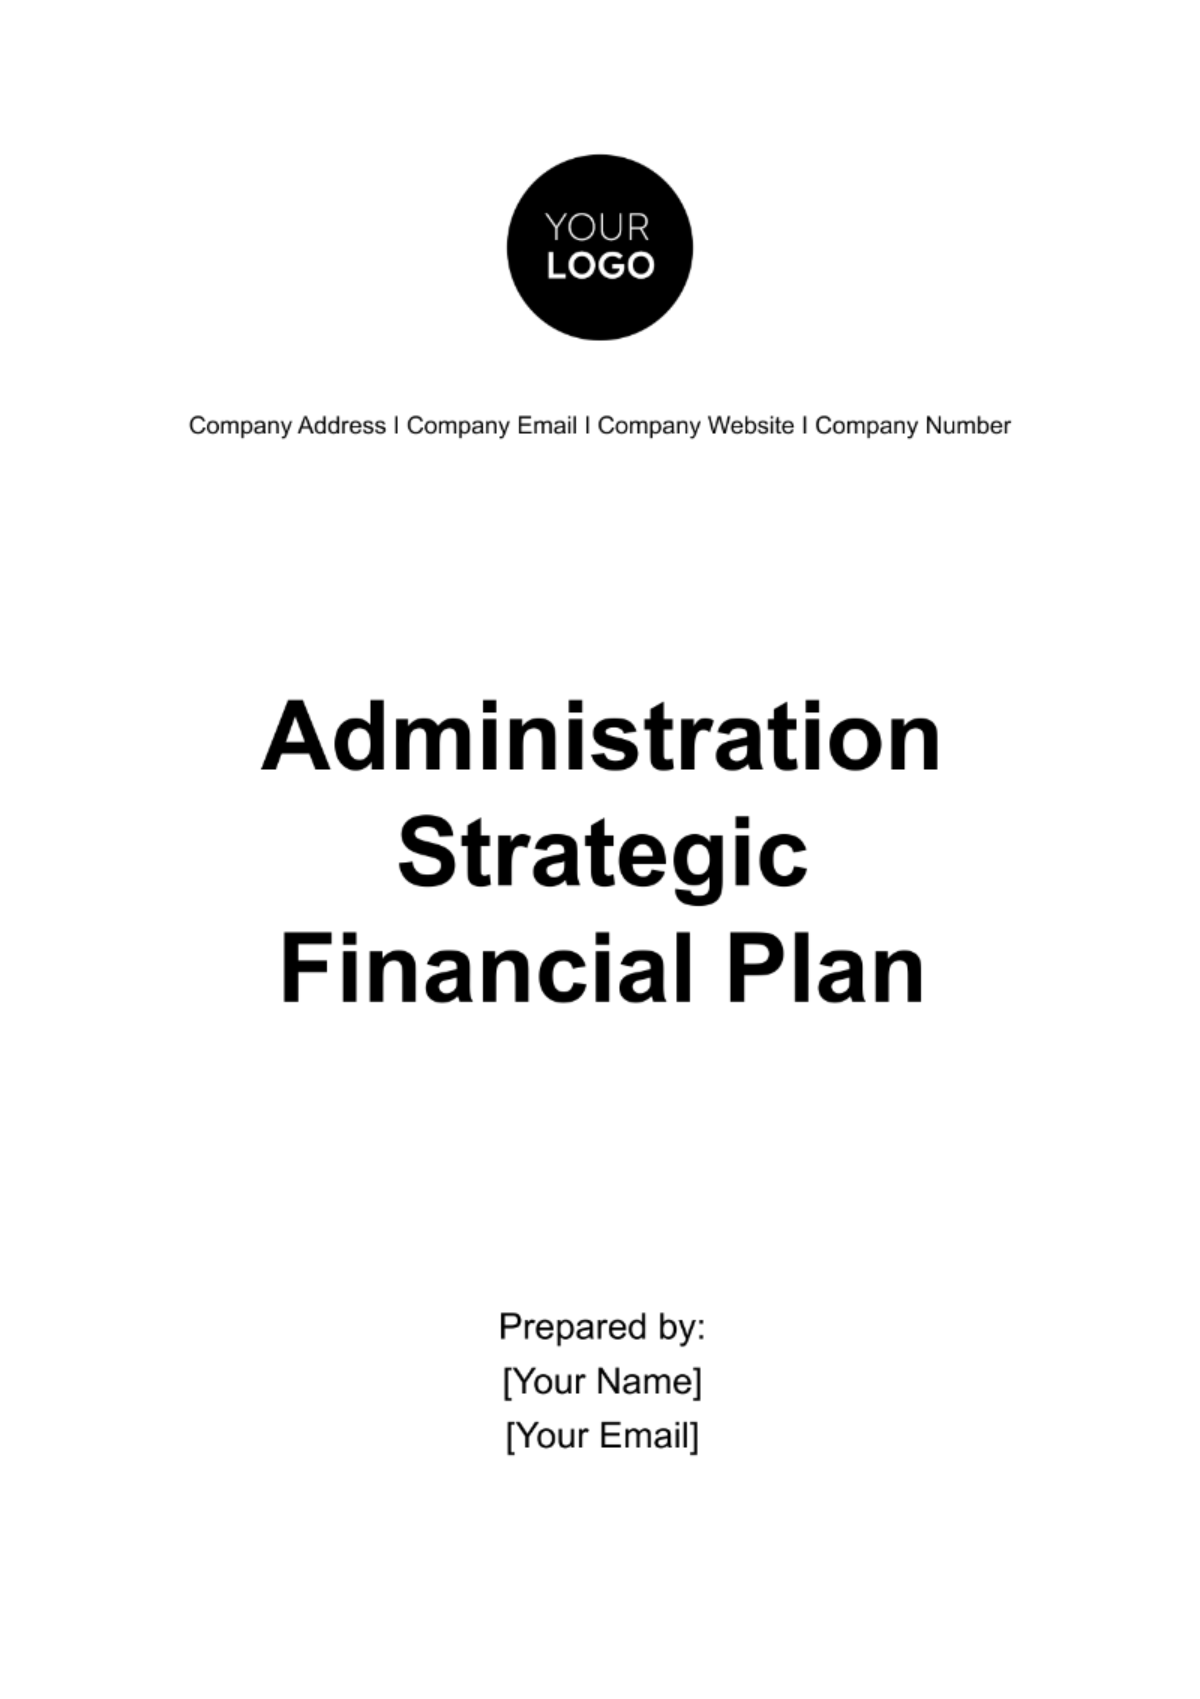 Administration Strategic Financial Plan Template